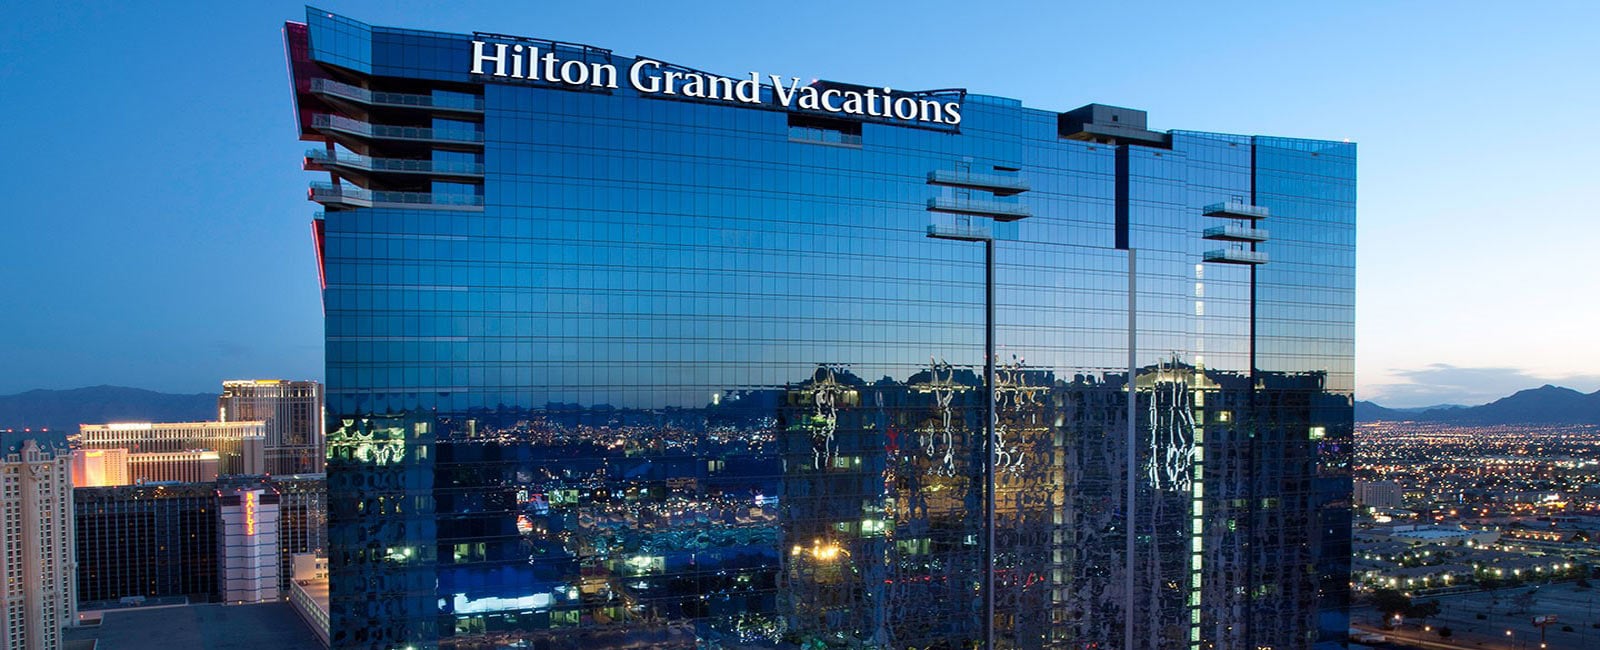 hilton grand vacations timeshare presentation reviews